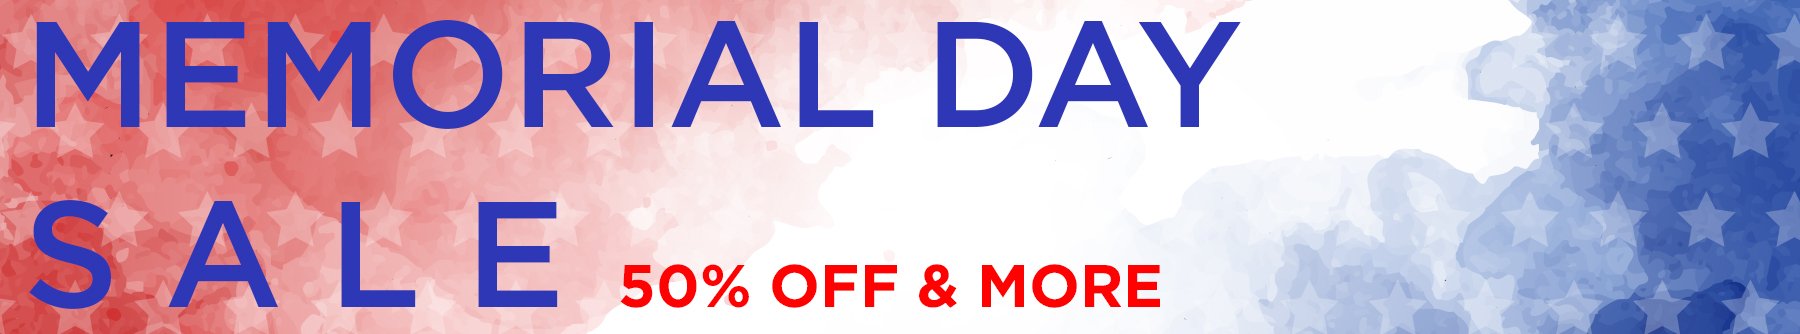 Memorial Day Sales - 50% off & more!